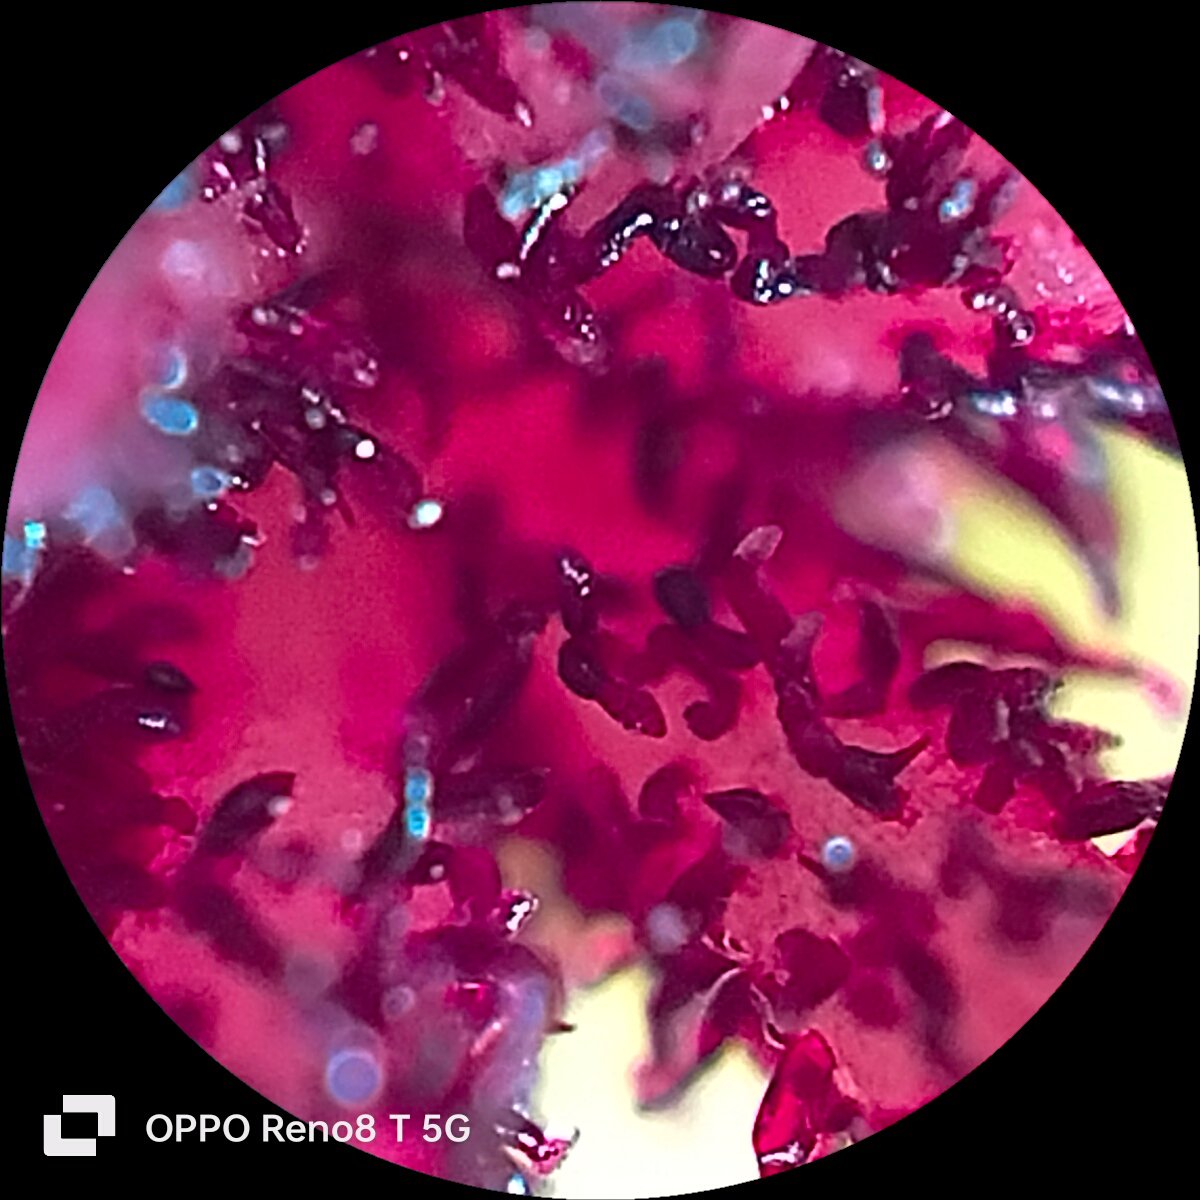 OPPO Reno 8T 5G Review: A Mix of Premium Design, Decent Specs - Gizmochina